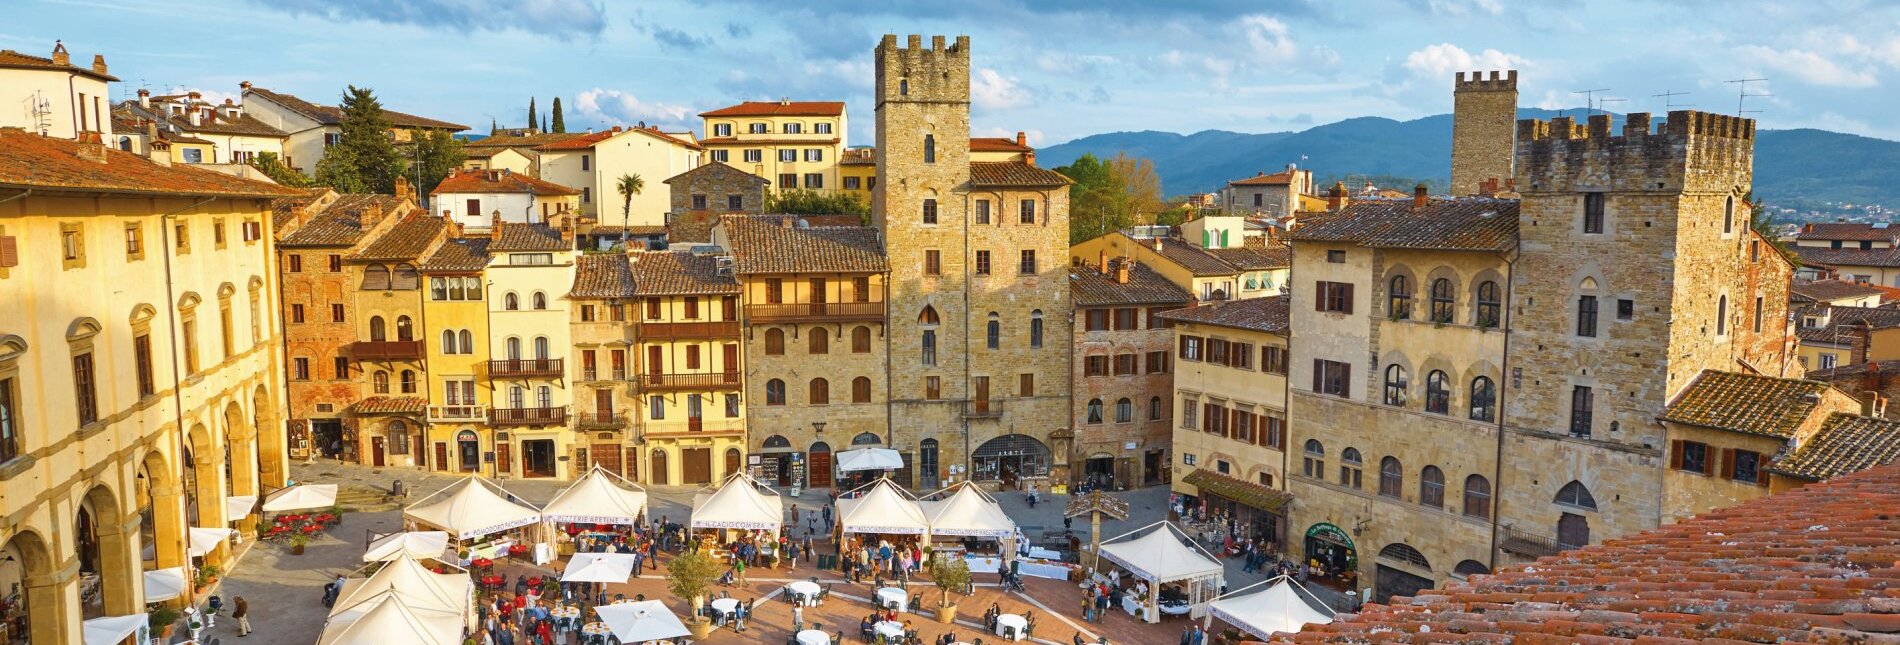 Marktplatz in Arezzo